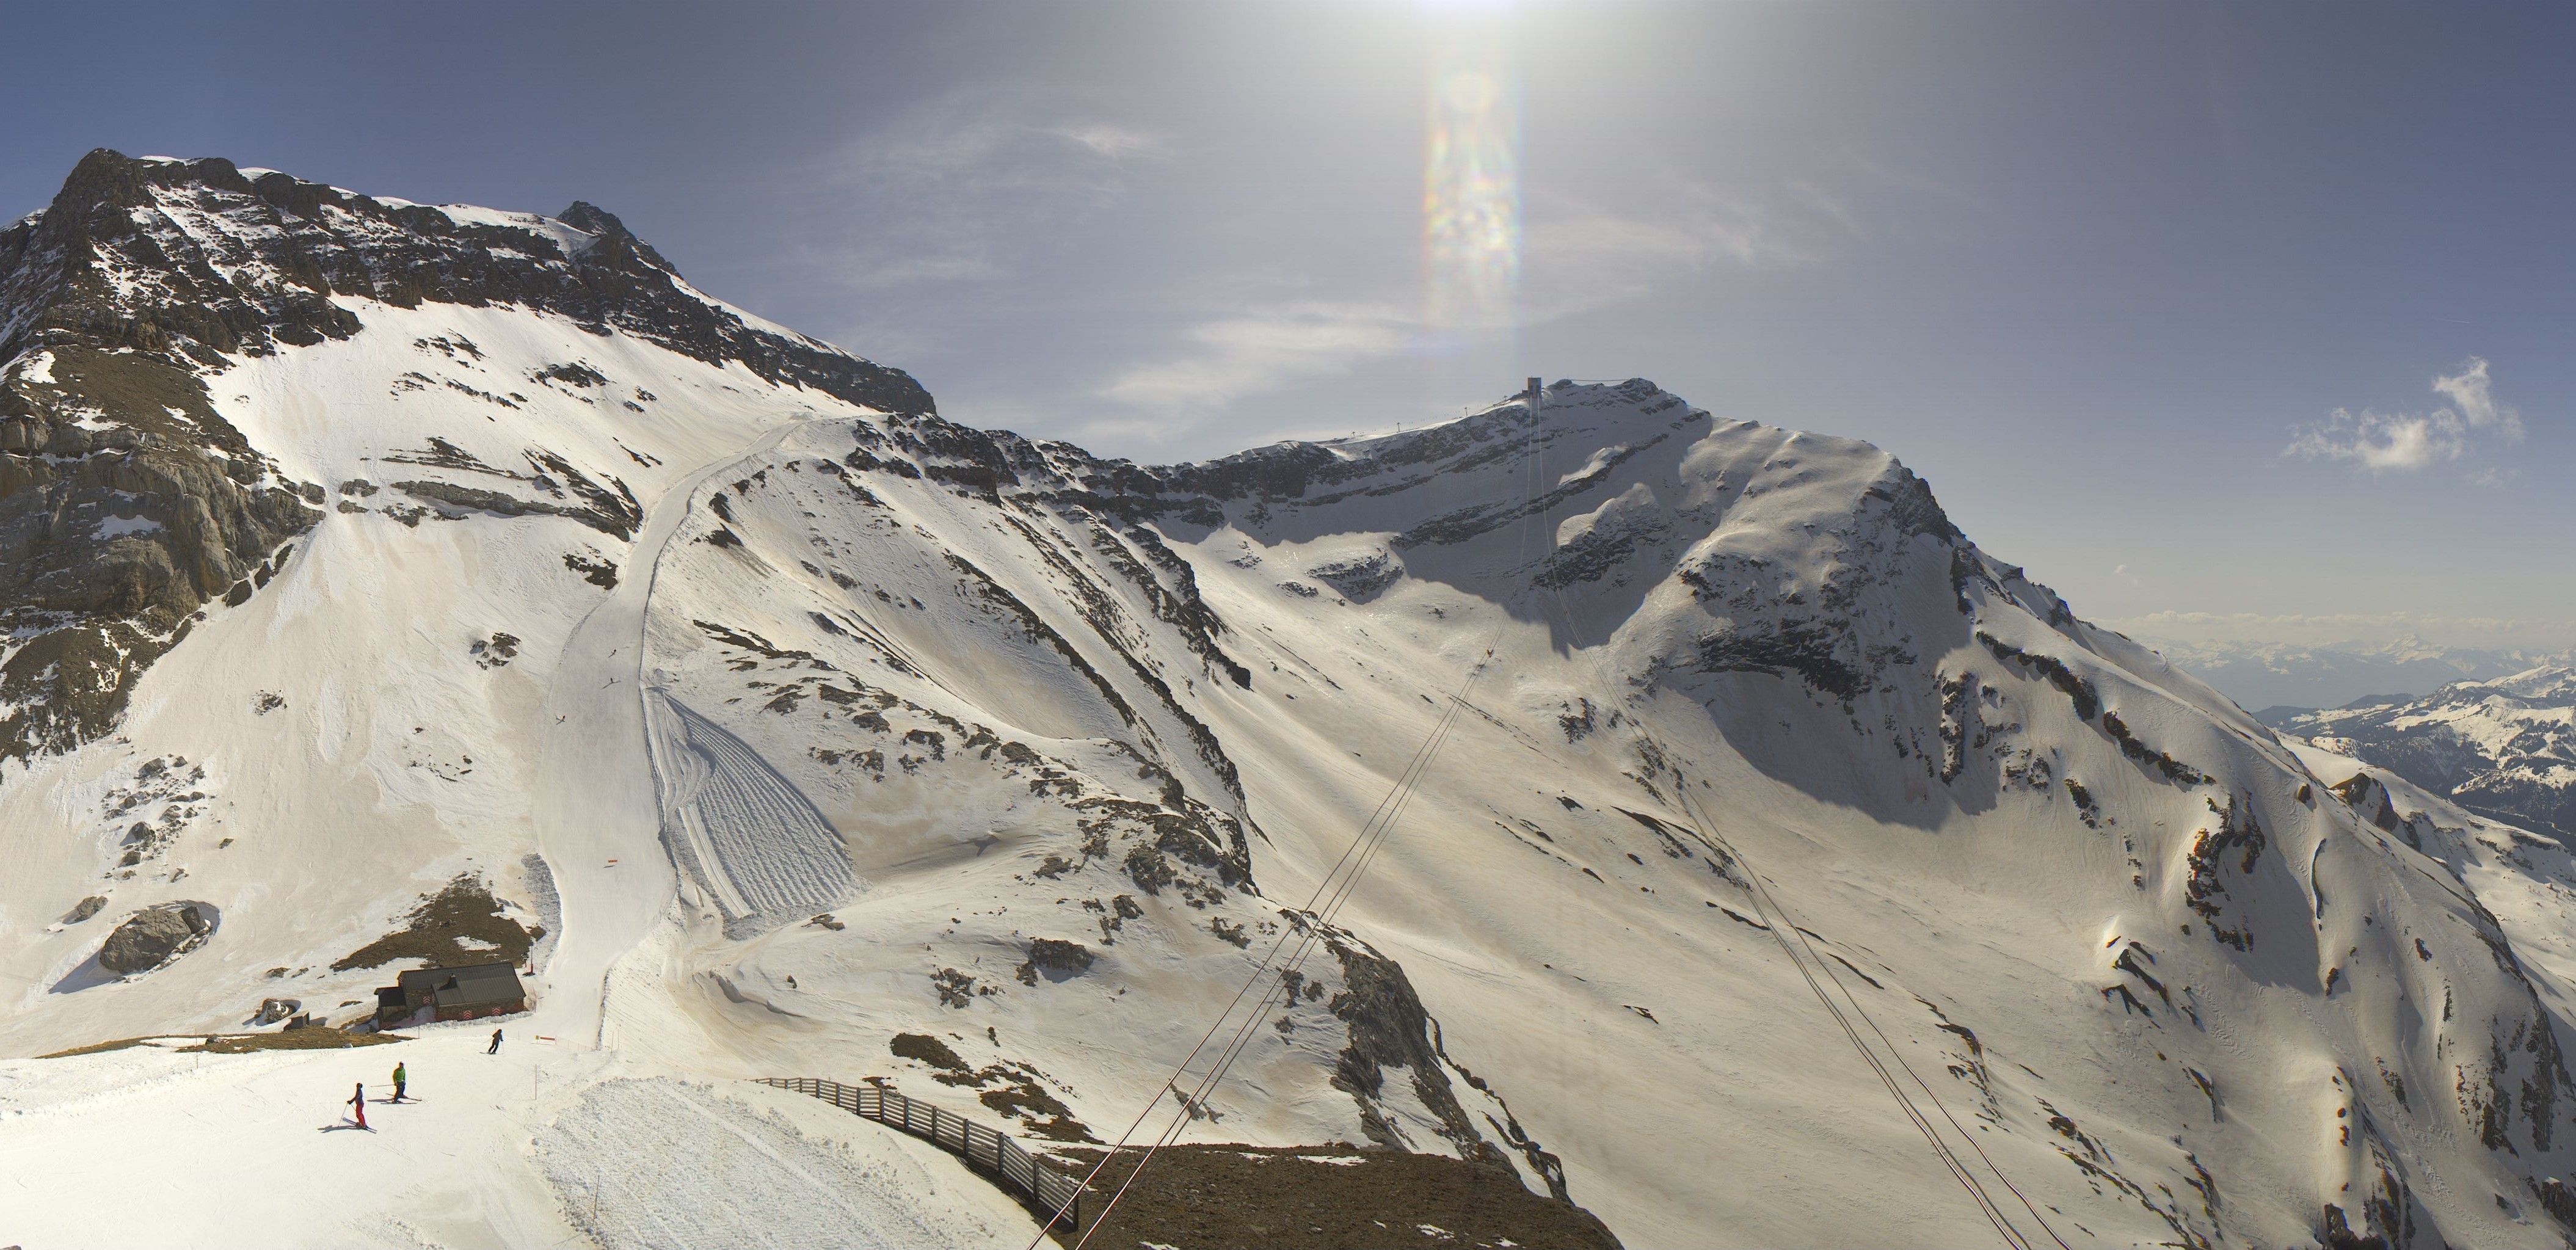 Spring conditions in the Alps (Glacier 3000, roundshot.com)